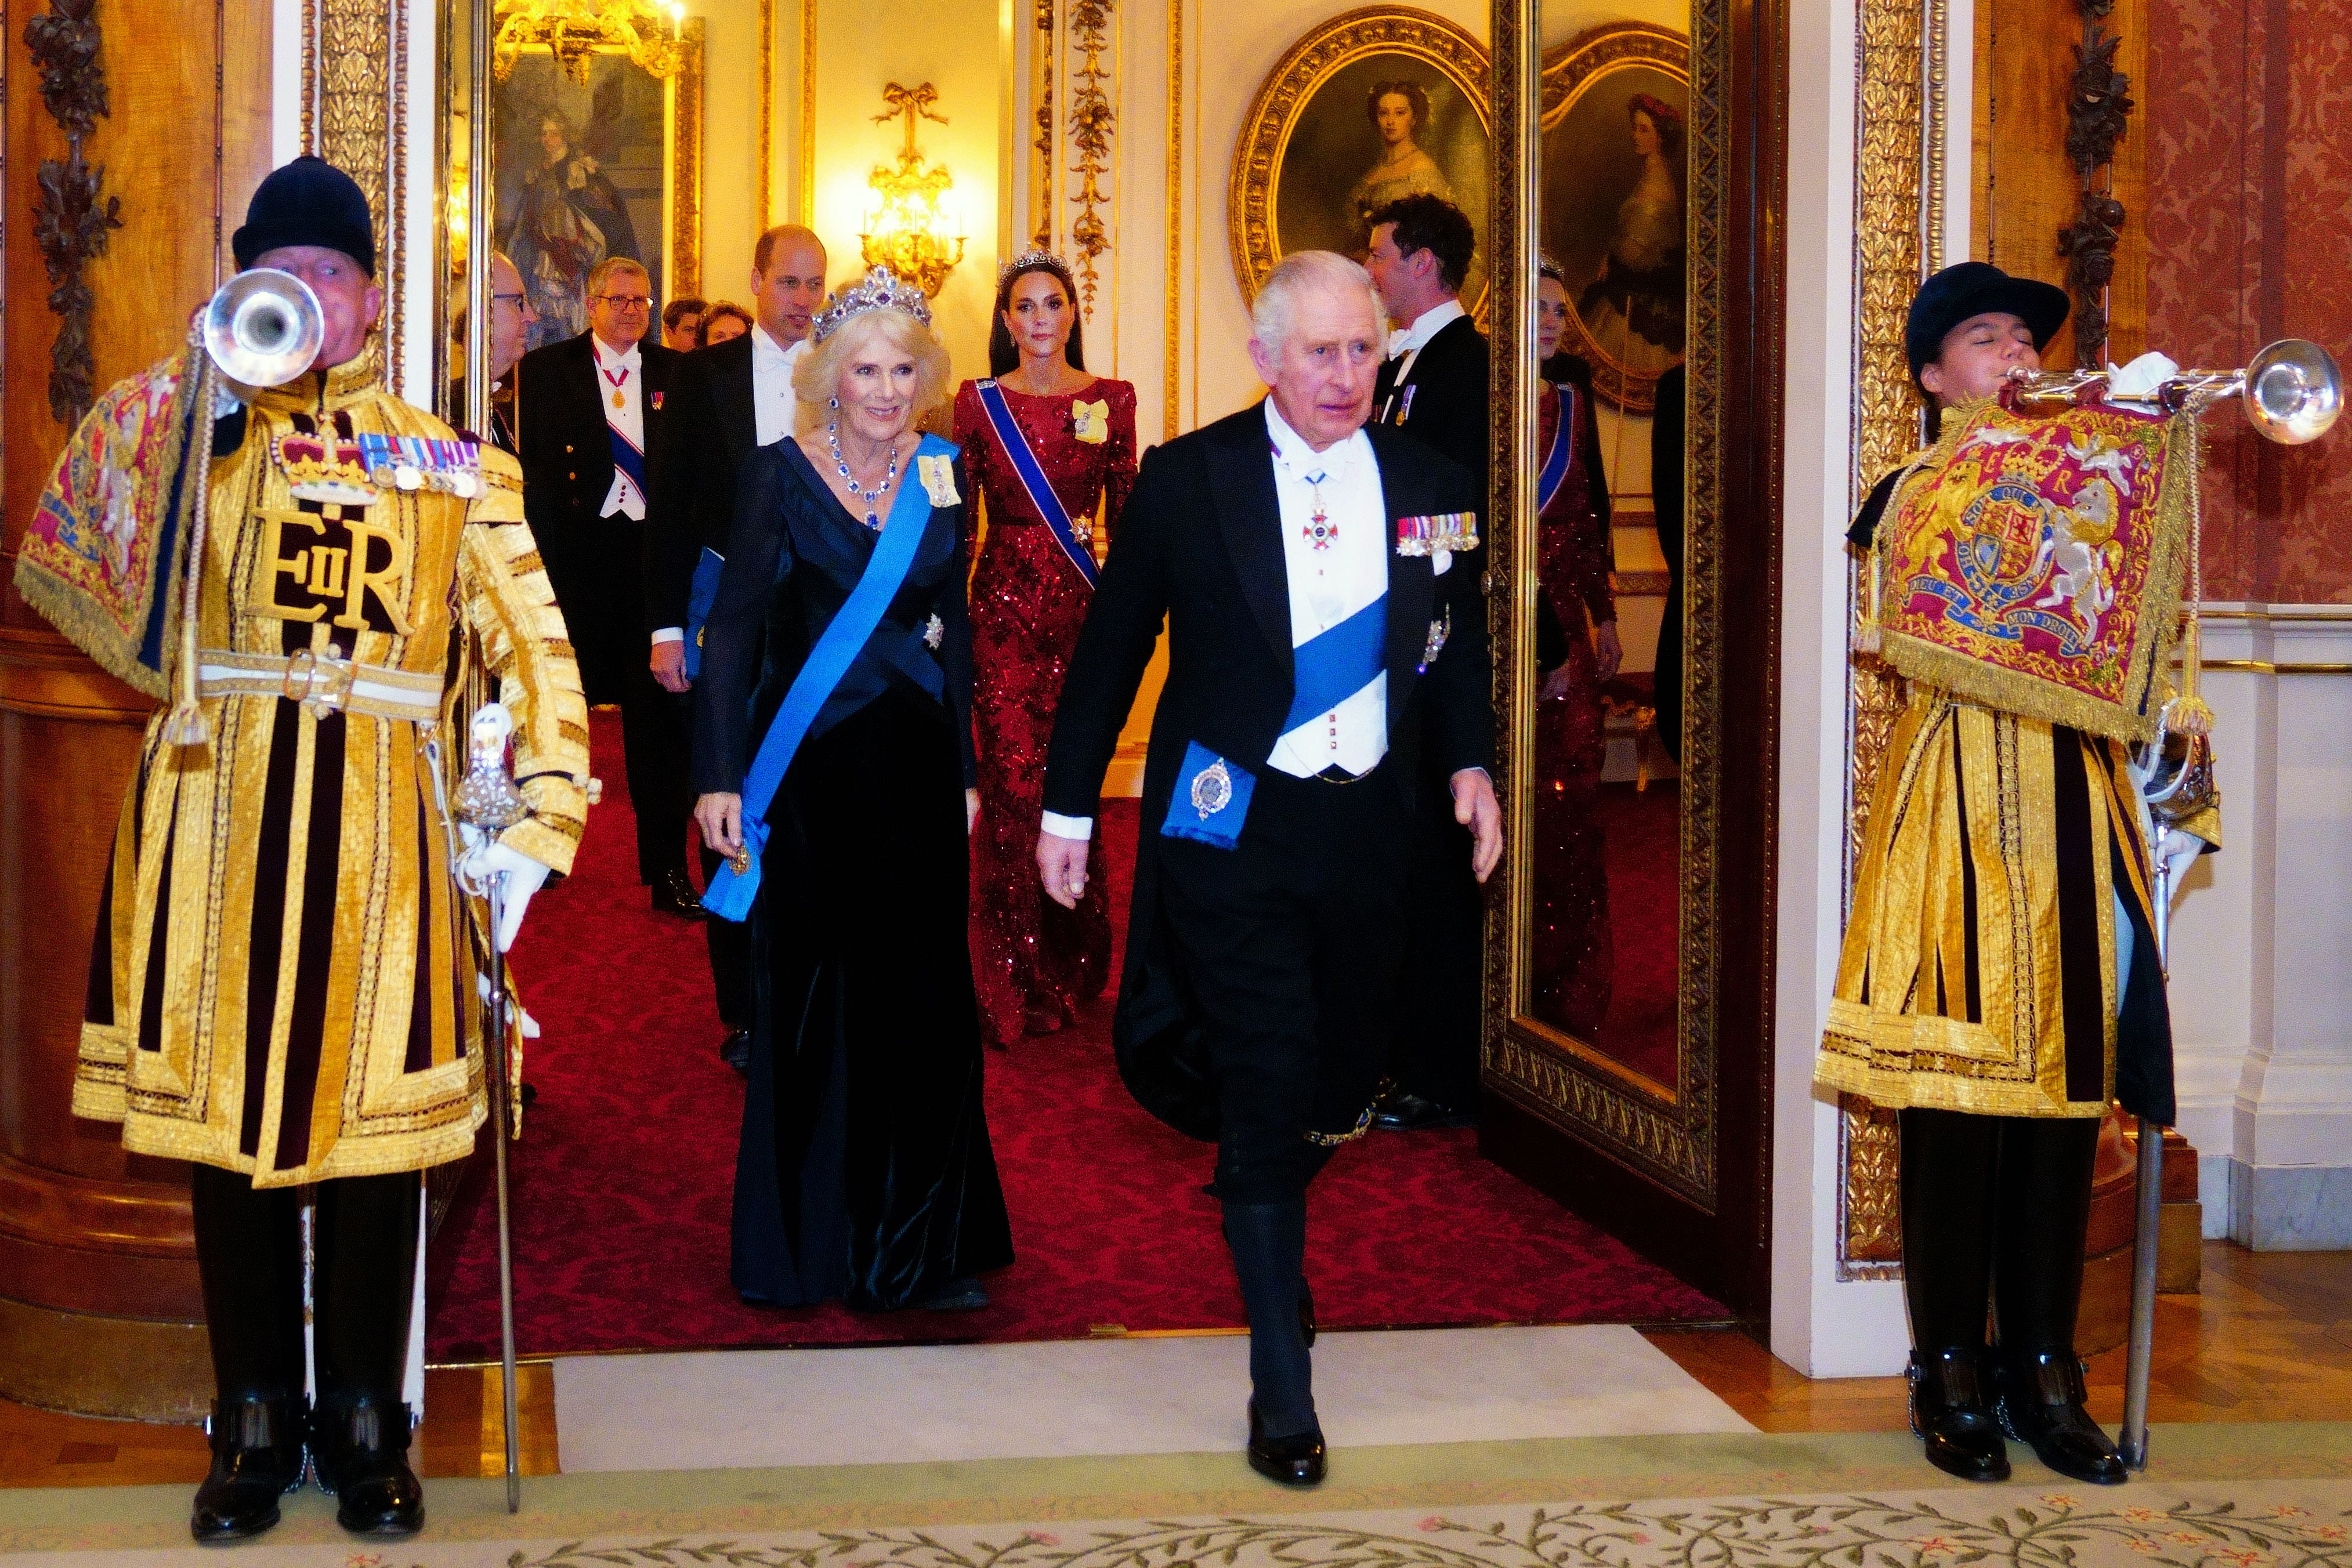 King Charles III Coronation Vs Queen Elizabeth II: Photos